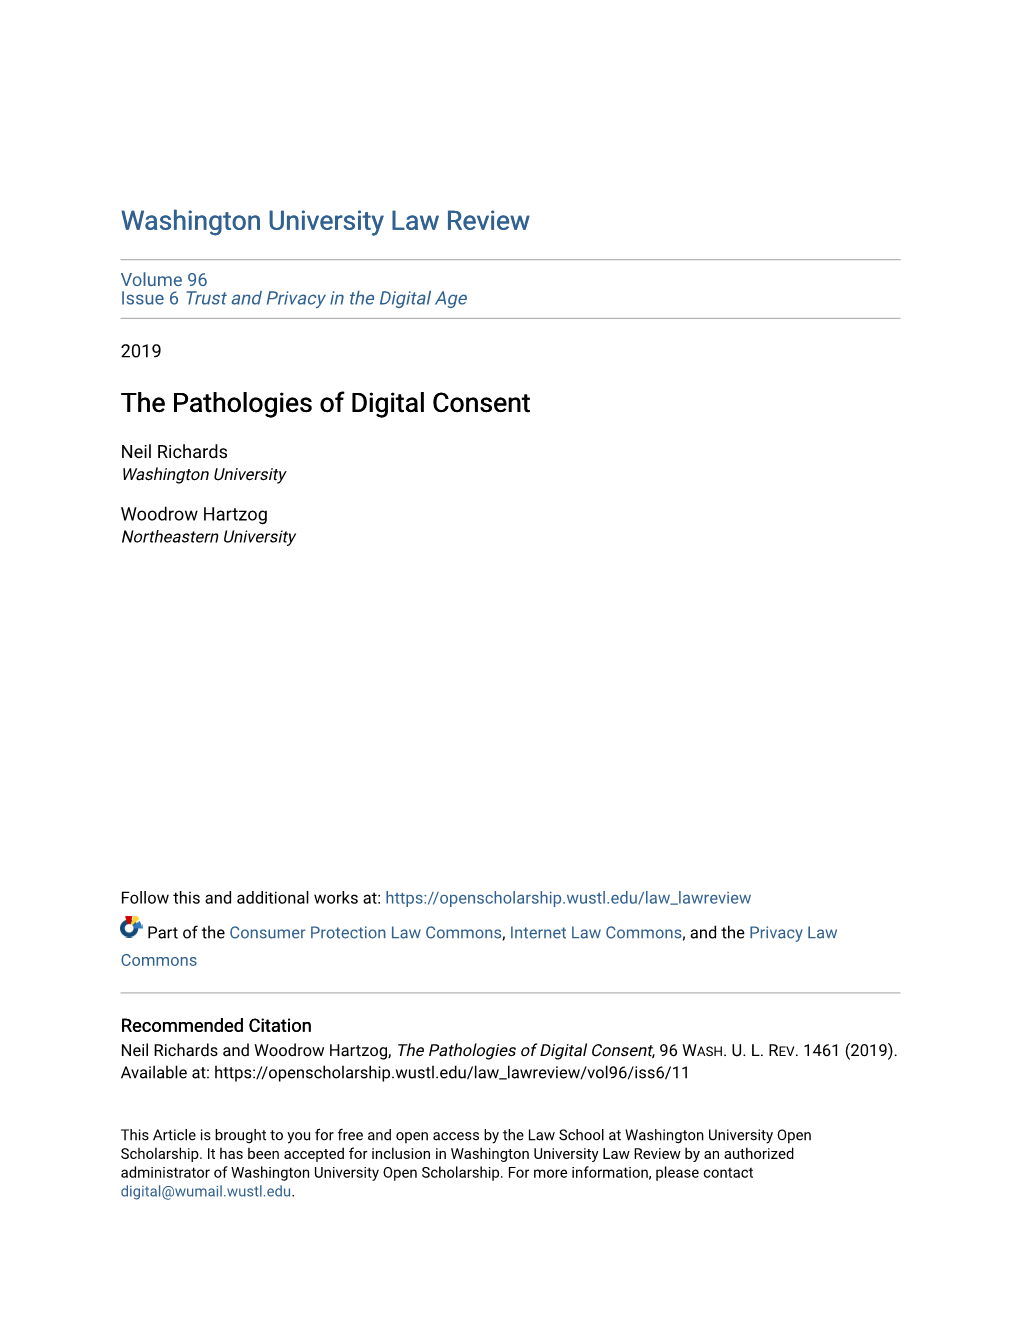 The Pathologies of Digital Consent